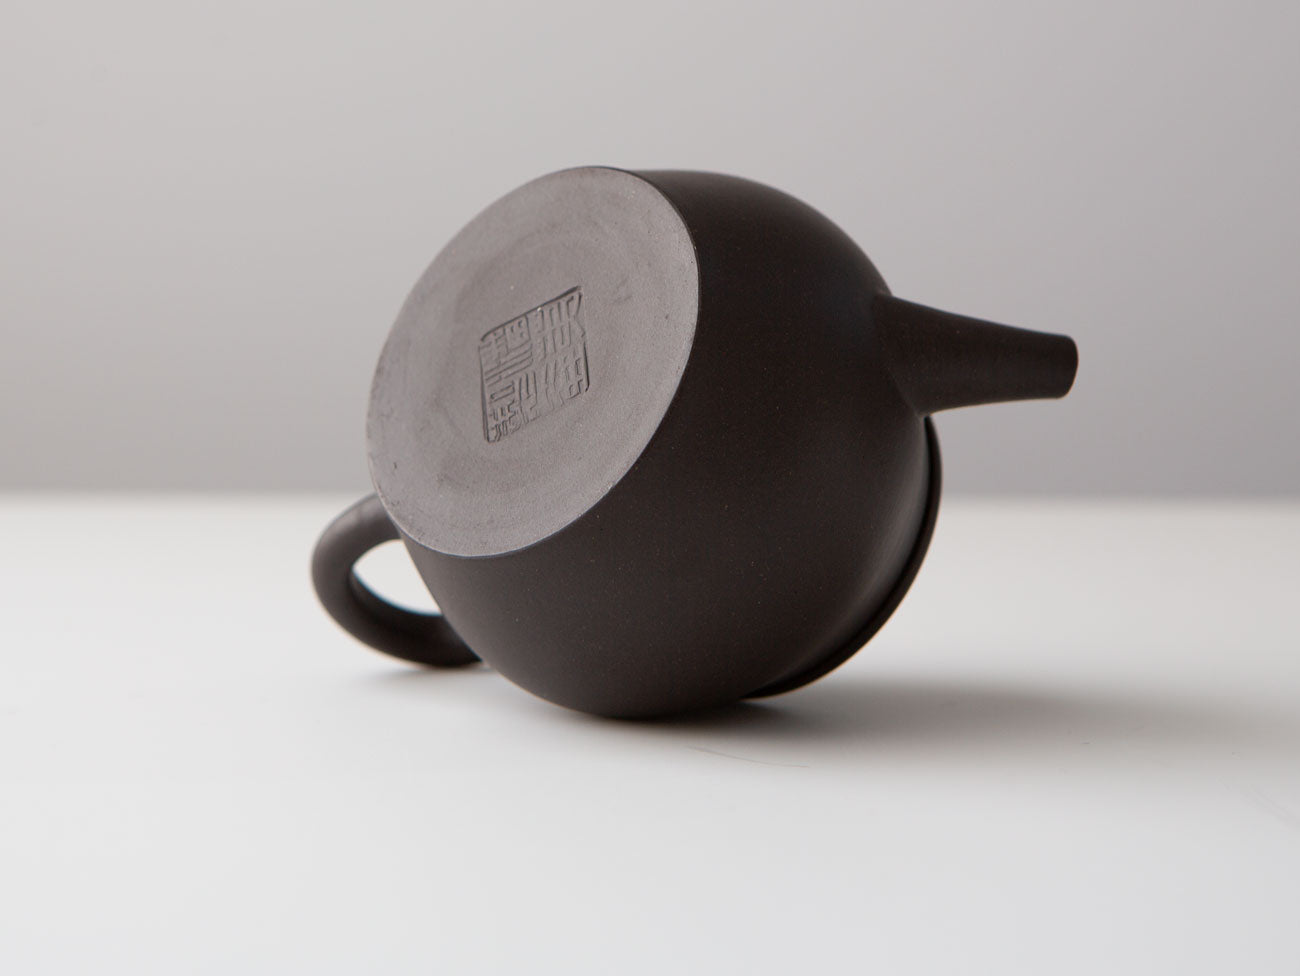 Dark Materials Teapot, Hei liao. Zisha.